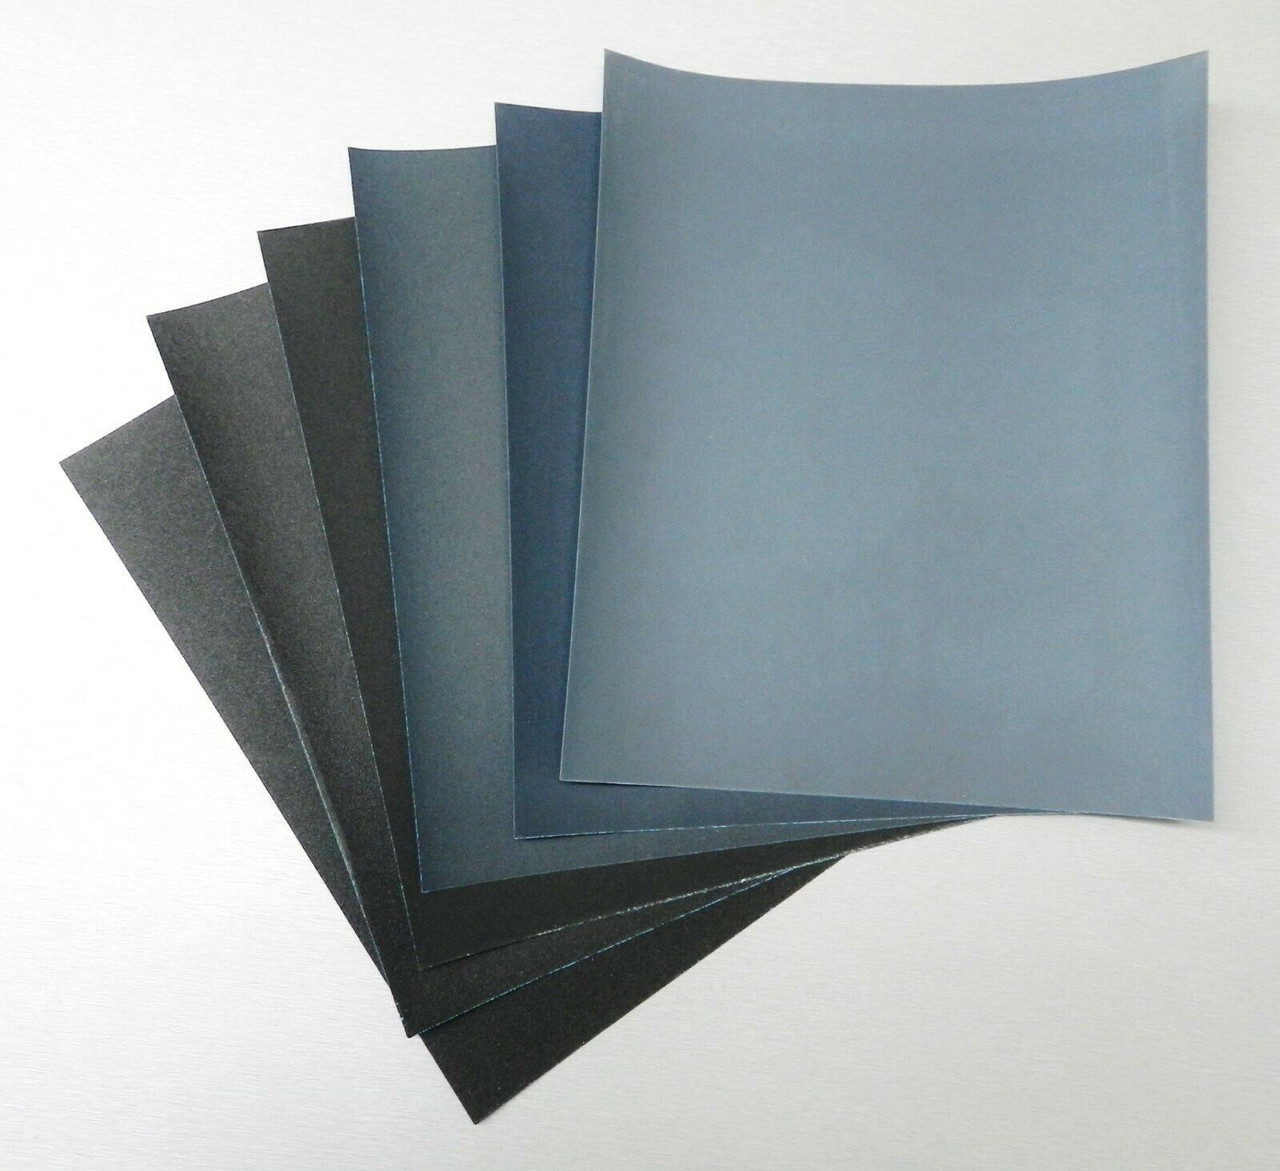 Matador Waterproof Sandpaper Wet or Dry Abrasive Paper 3000 Grit Per Pack of 50 Made in Germany